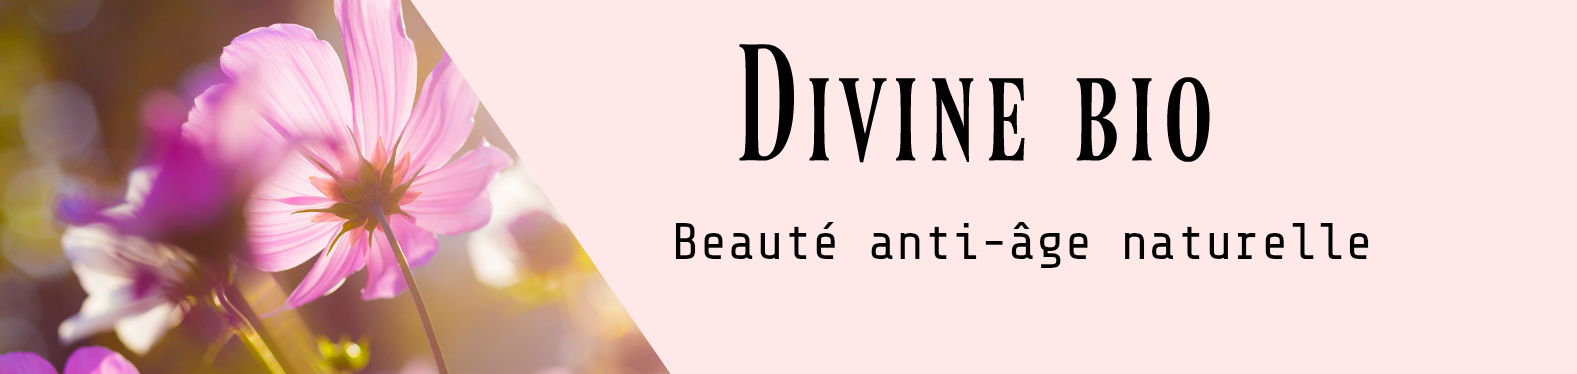 Divine bio